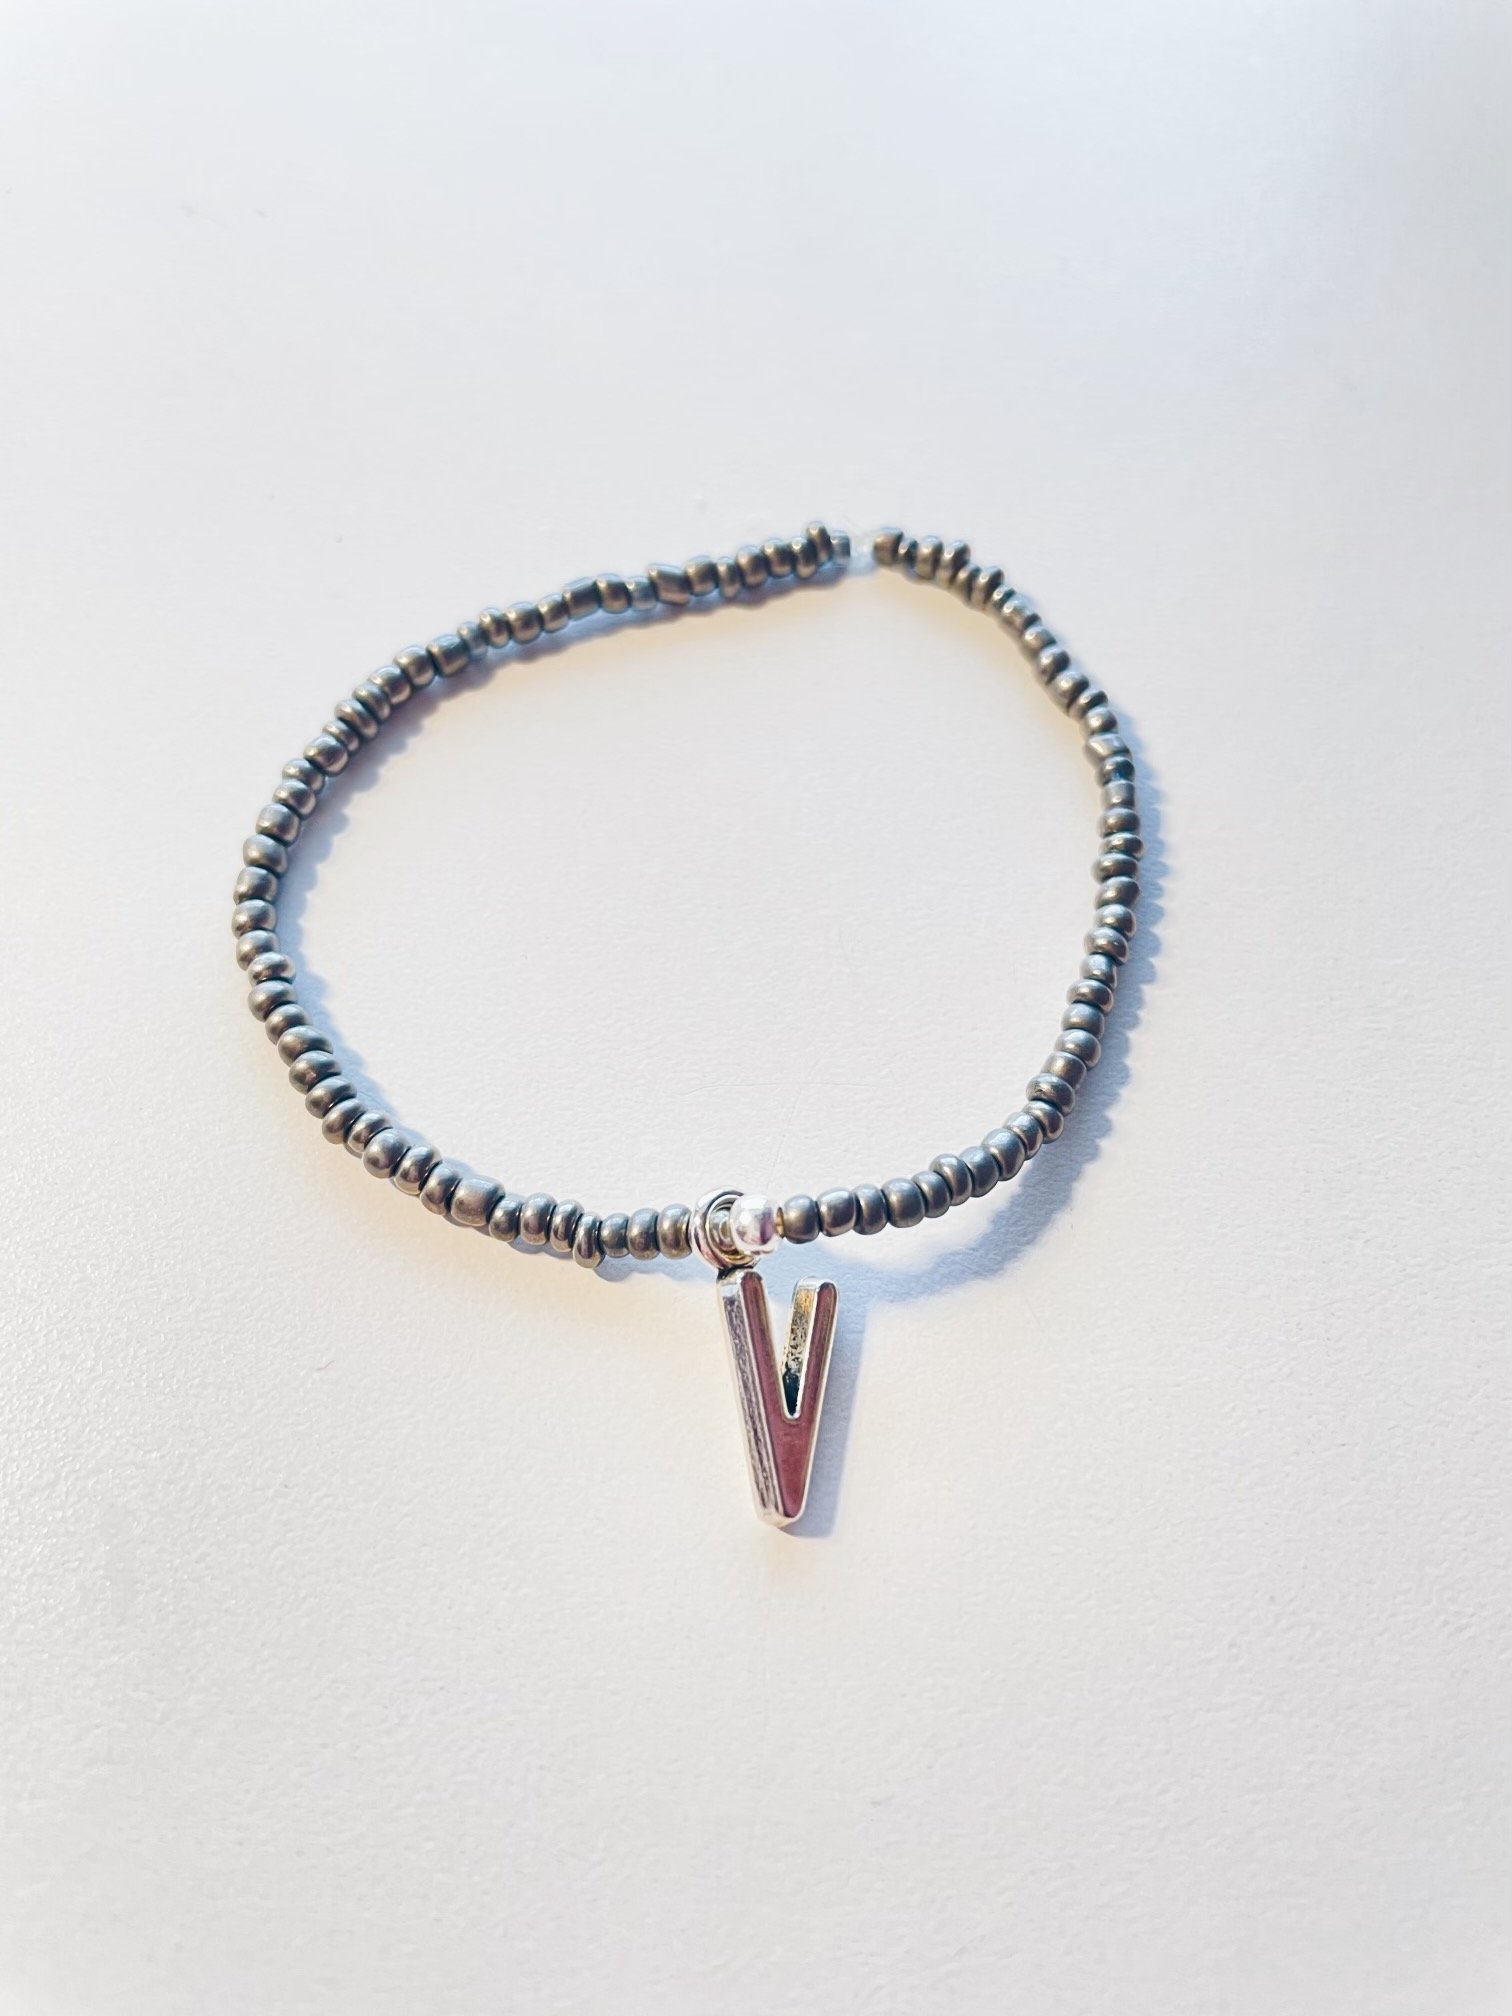 Image of metallic gray initial bracelet